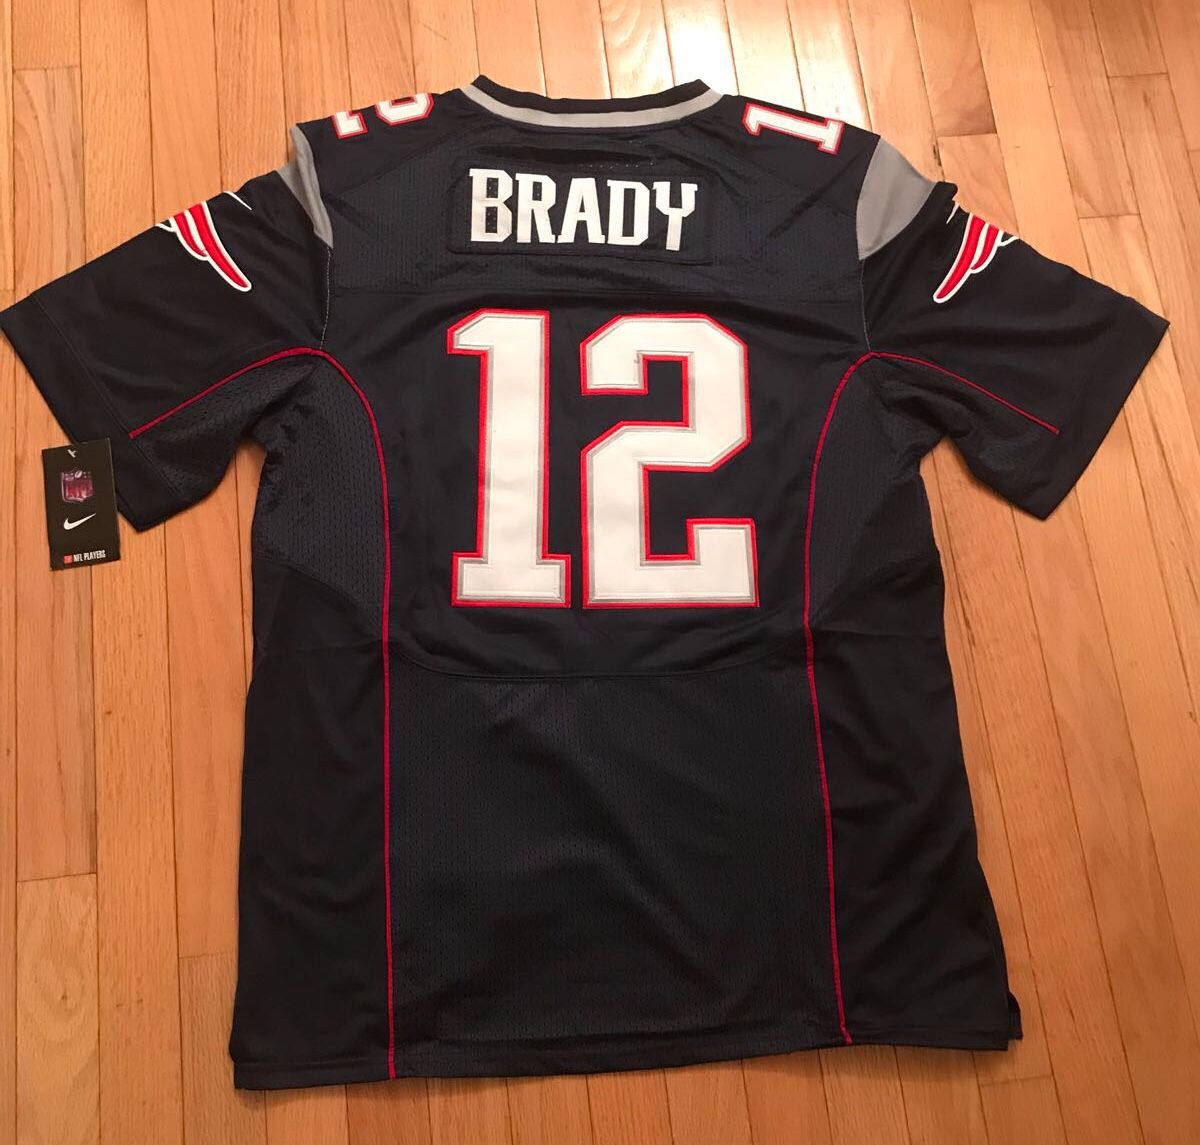 NEW Brady #12 New England Patriots jersey size LARGE